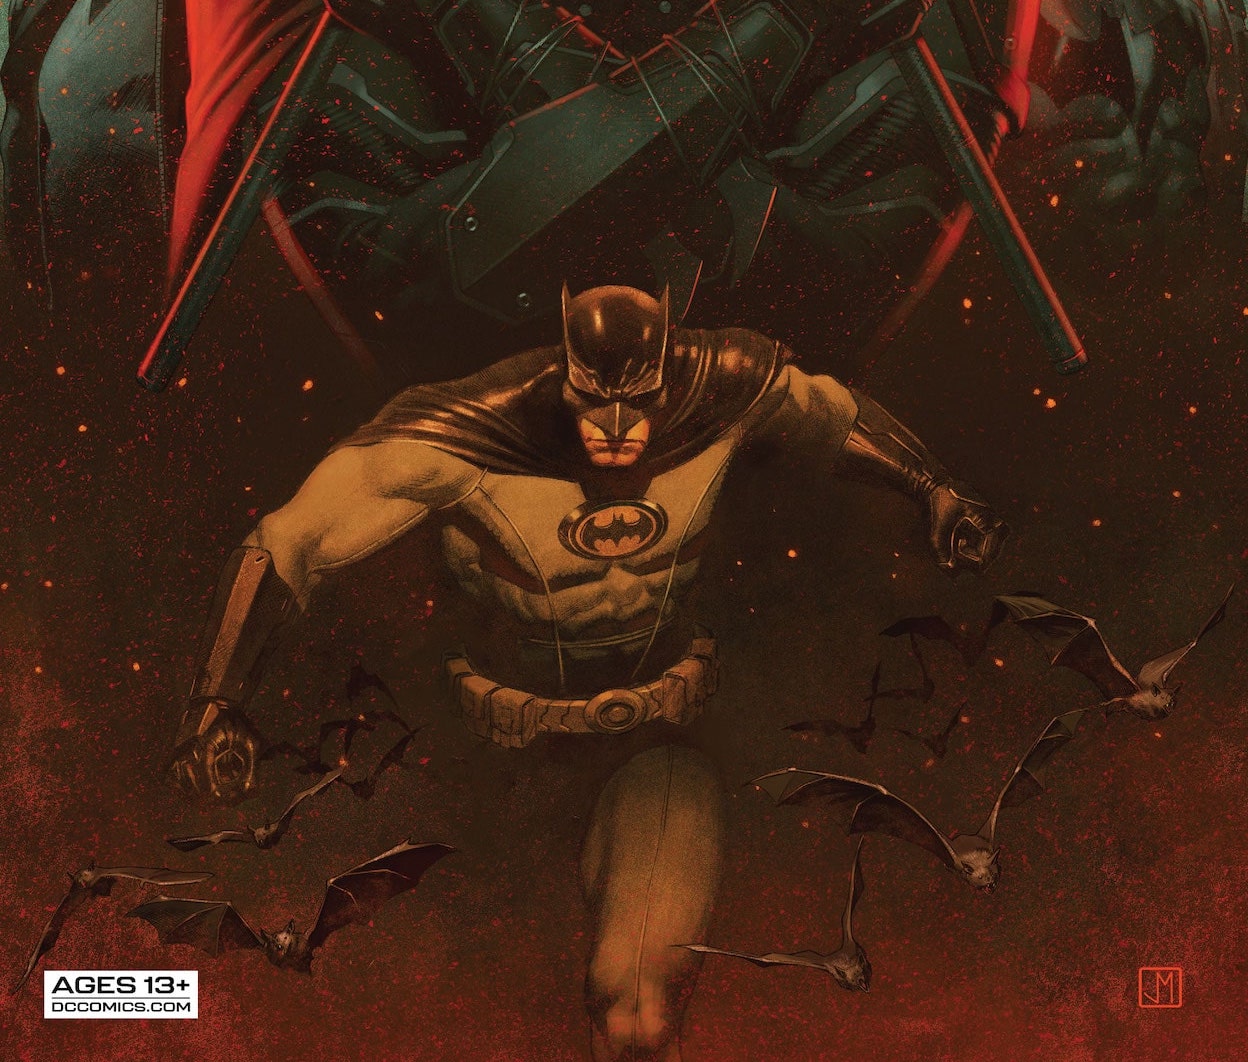 'Batman' #120 features a primal edge not often seen with Batman